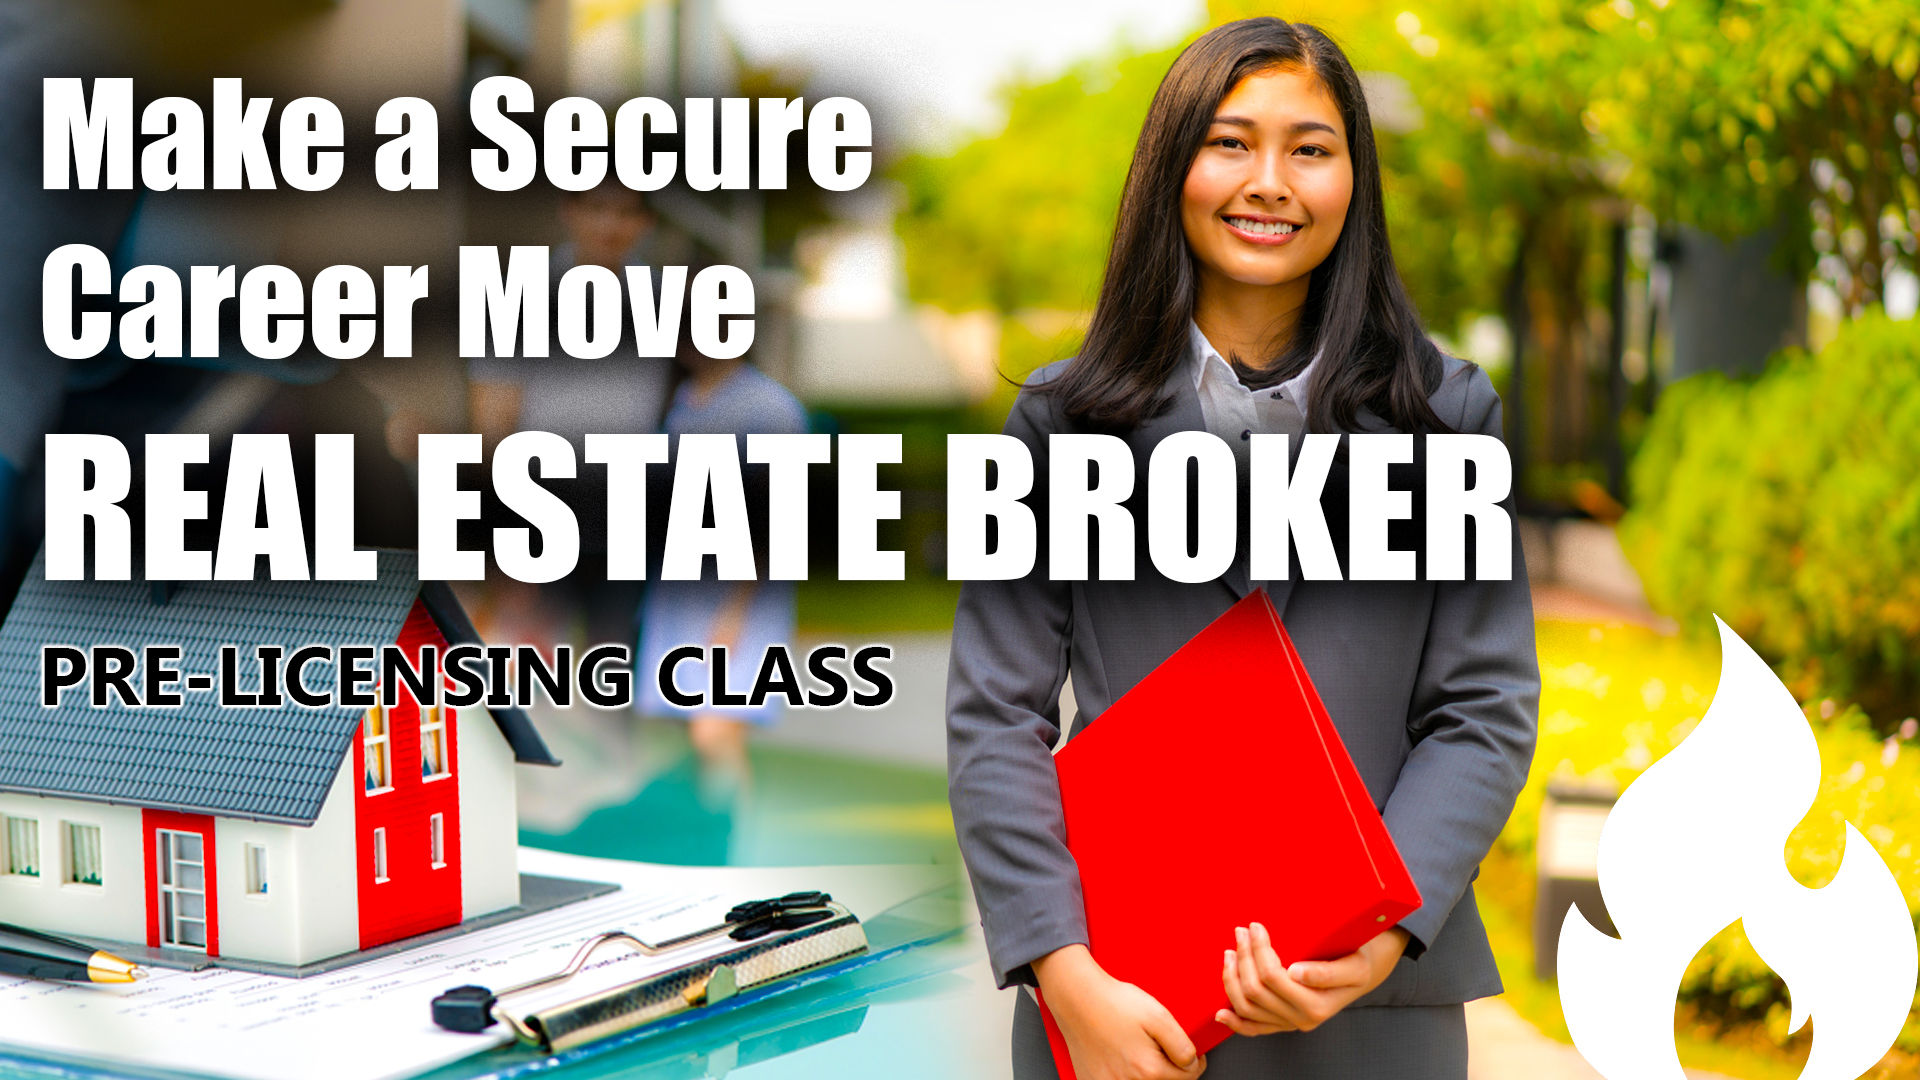 Make a Secure Career Move Real Estate Broker Pre-Licensing